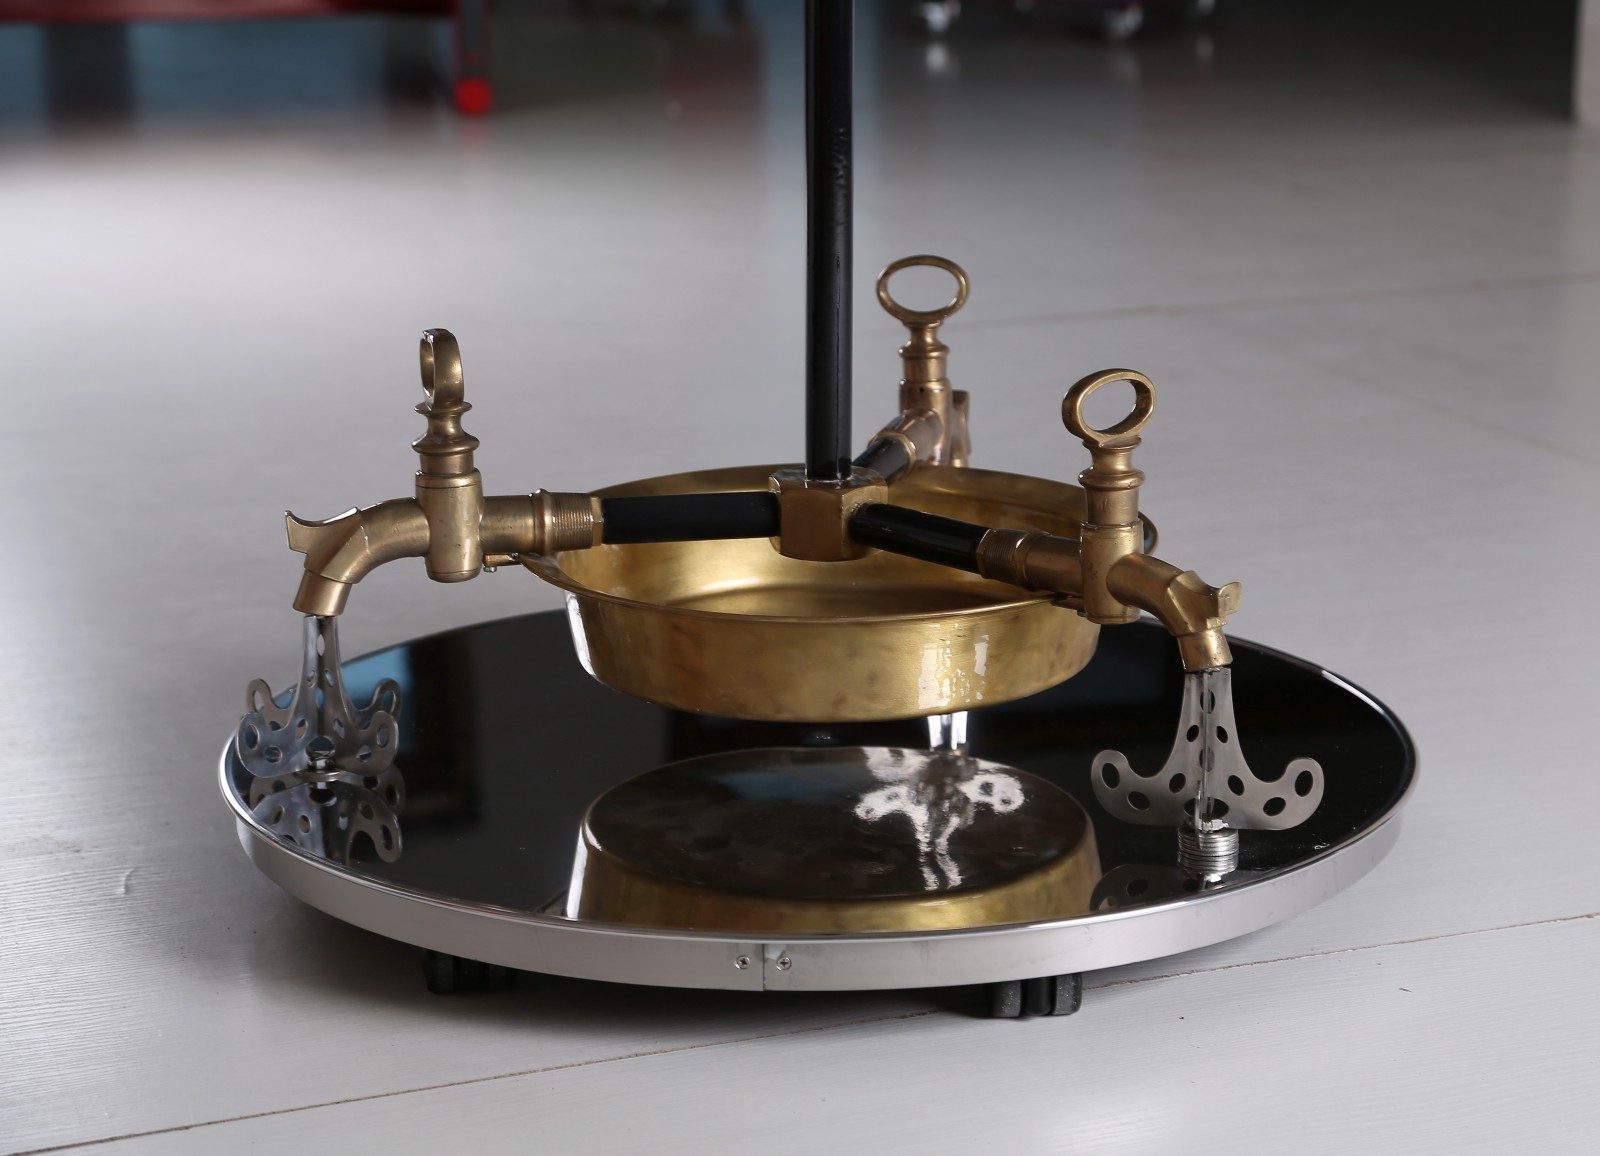 Plumbing washbowl hanger with clock